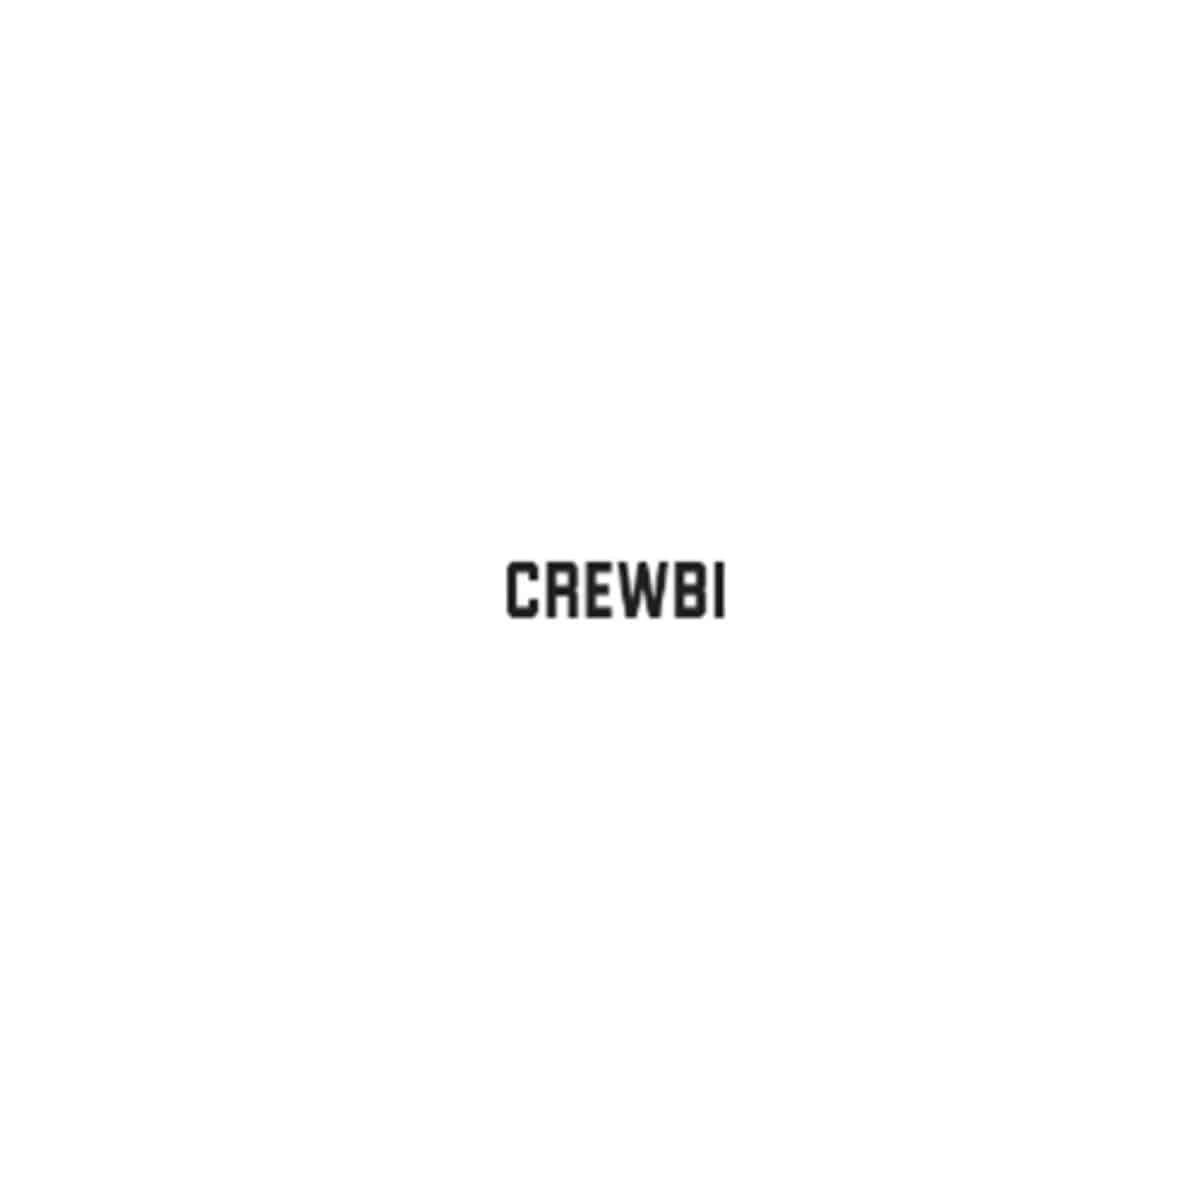 CREWBI - 어패럴싯